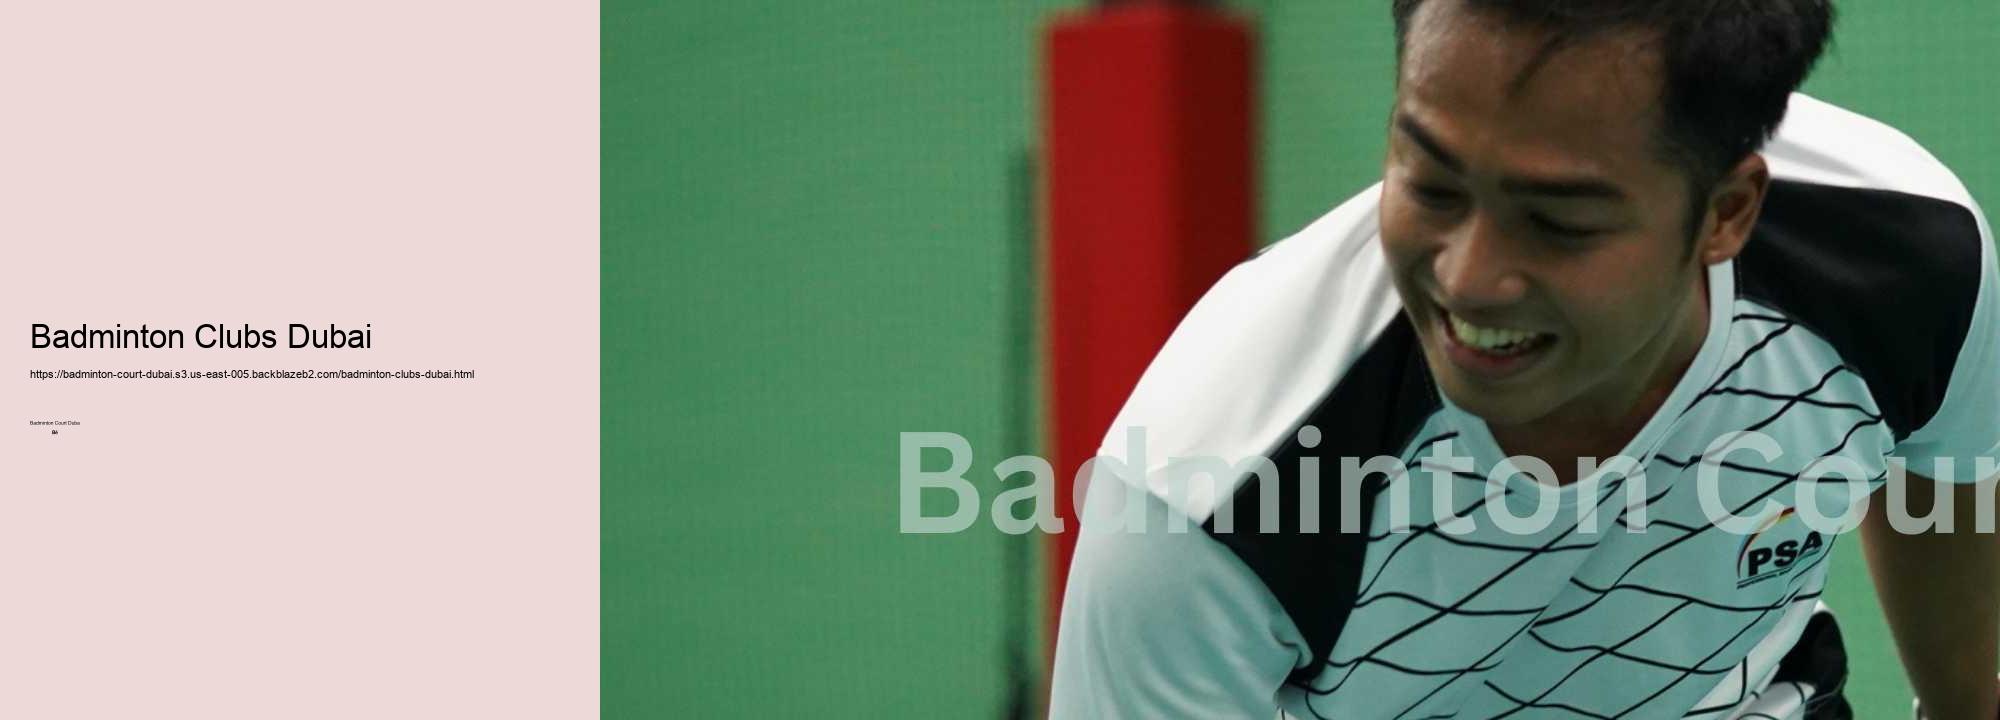 Badminton Clubs Dubai